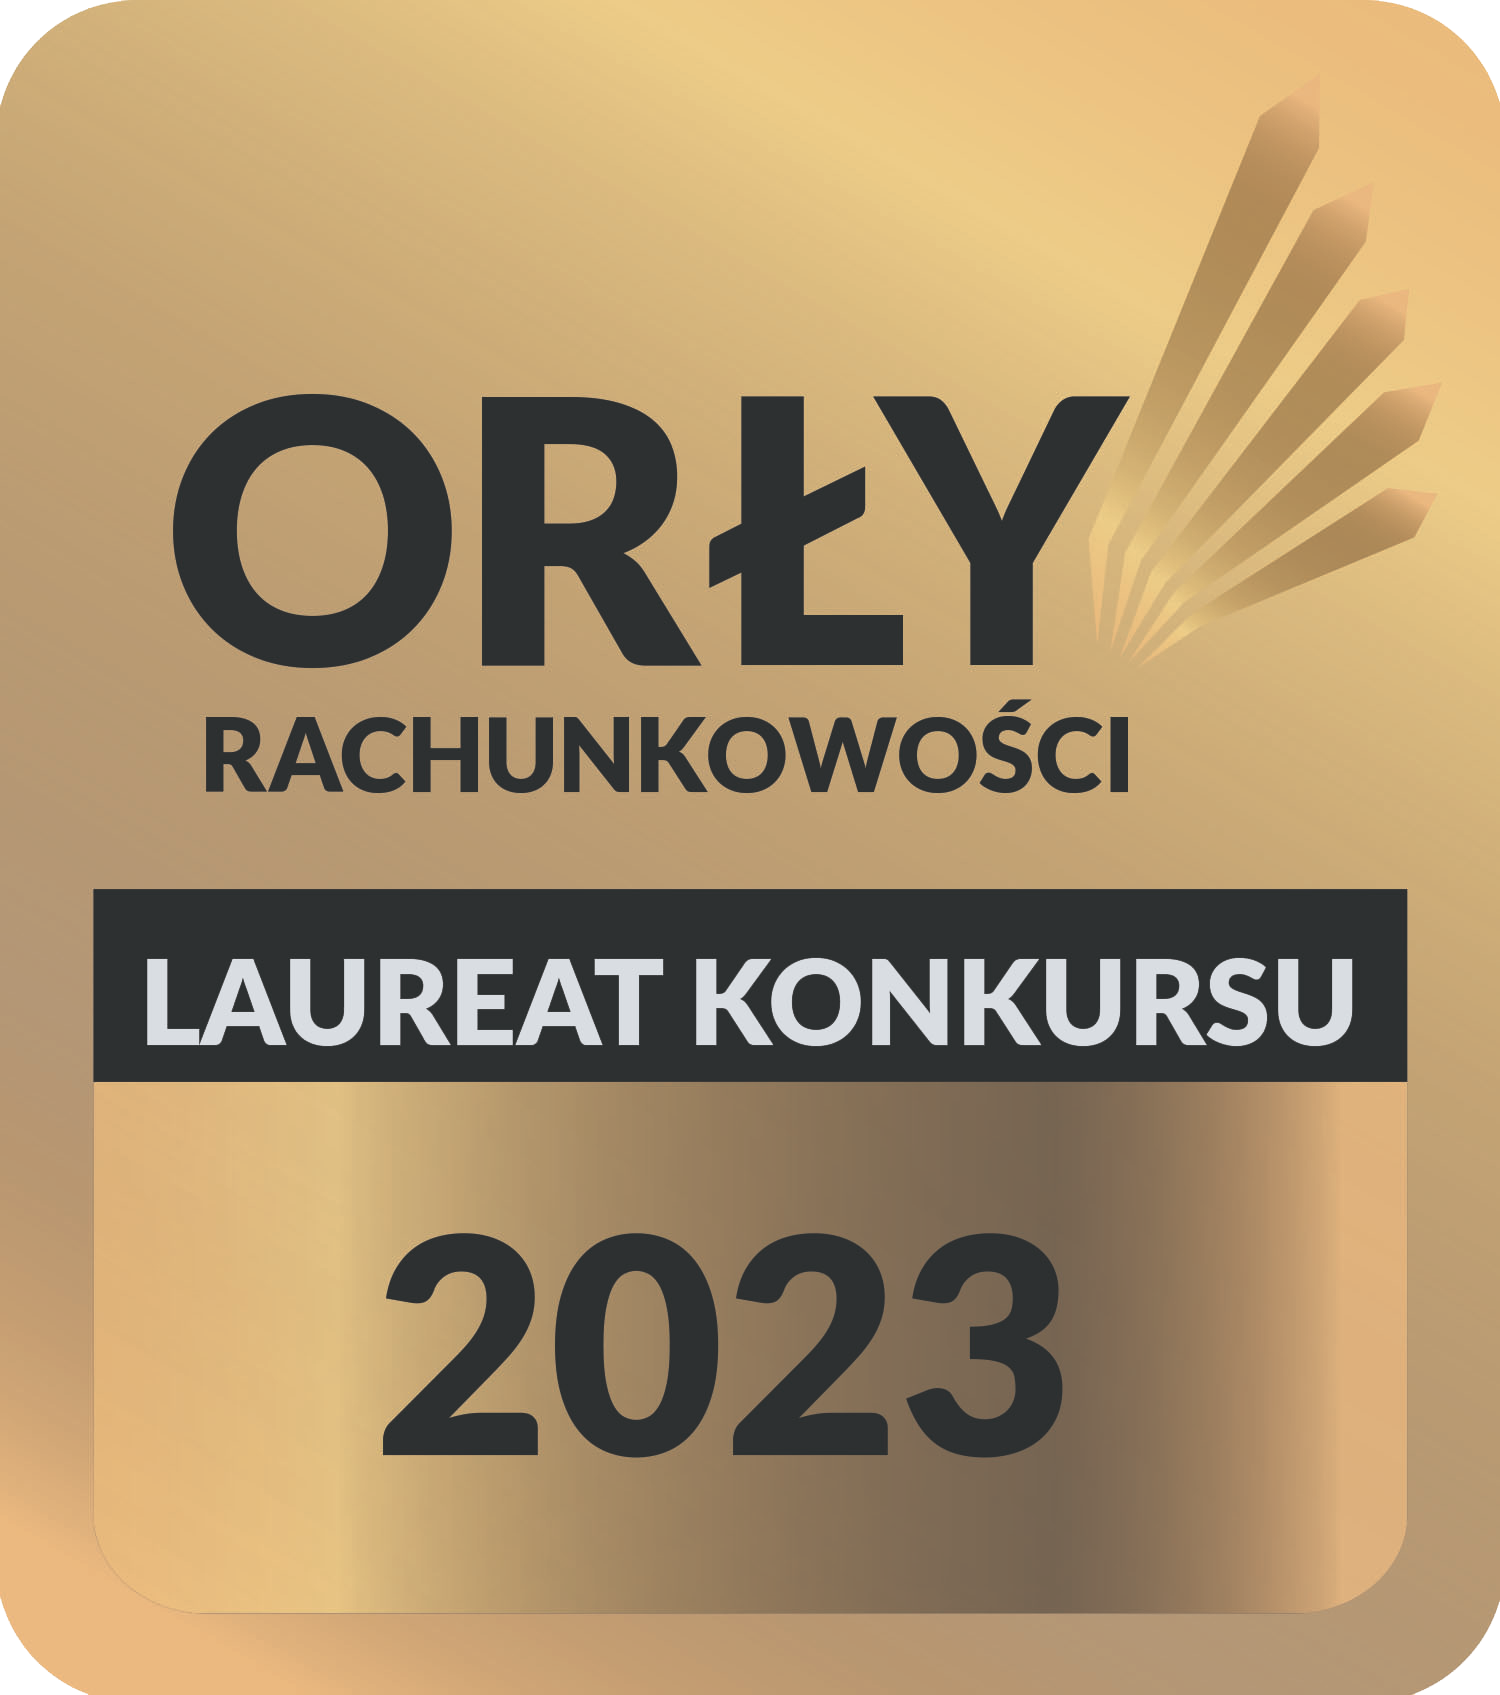 Biuro Rachunkowe QA Qualified Accounting jako laureat konkursu Orły Rachunkowości